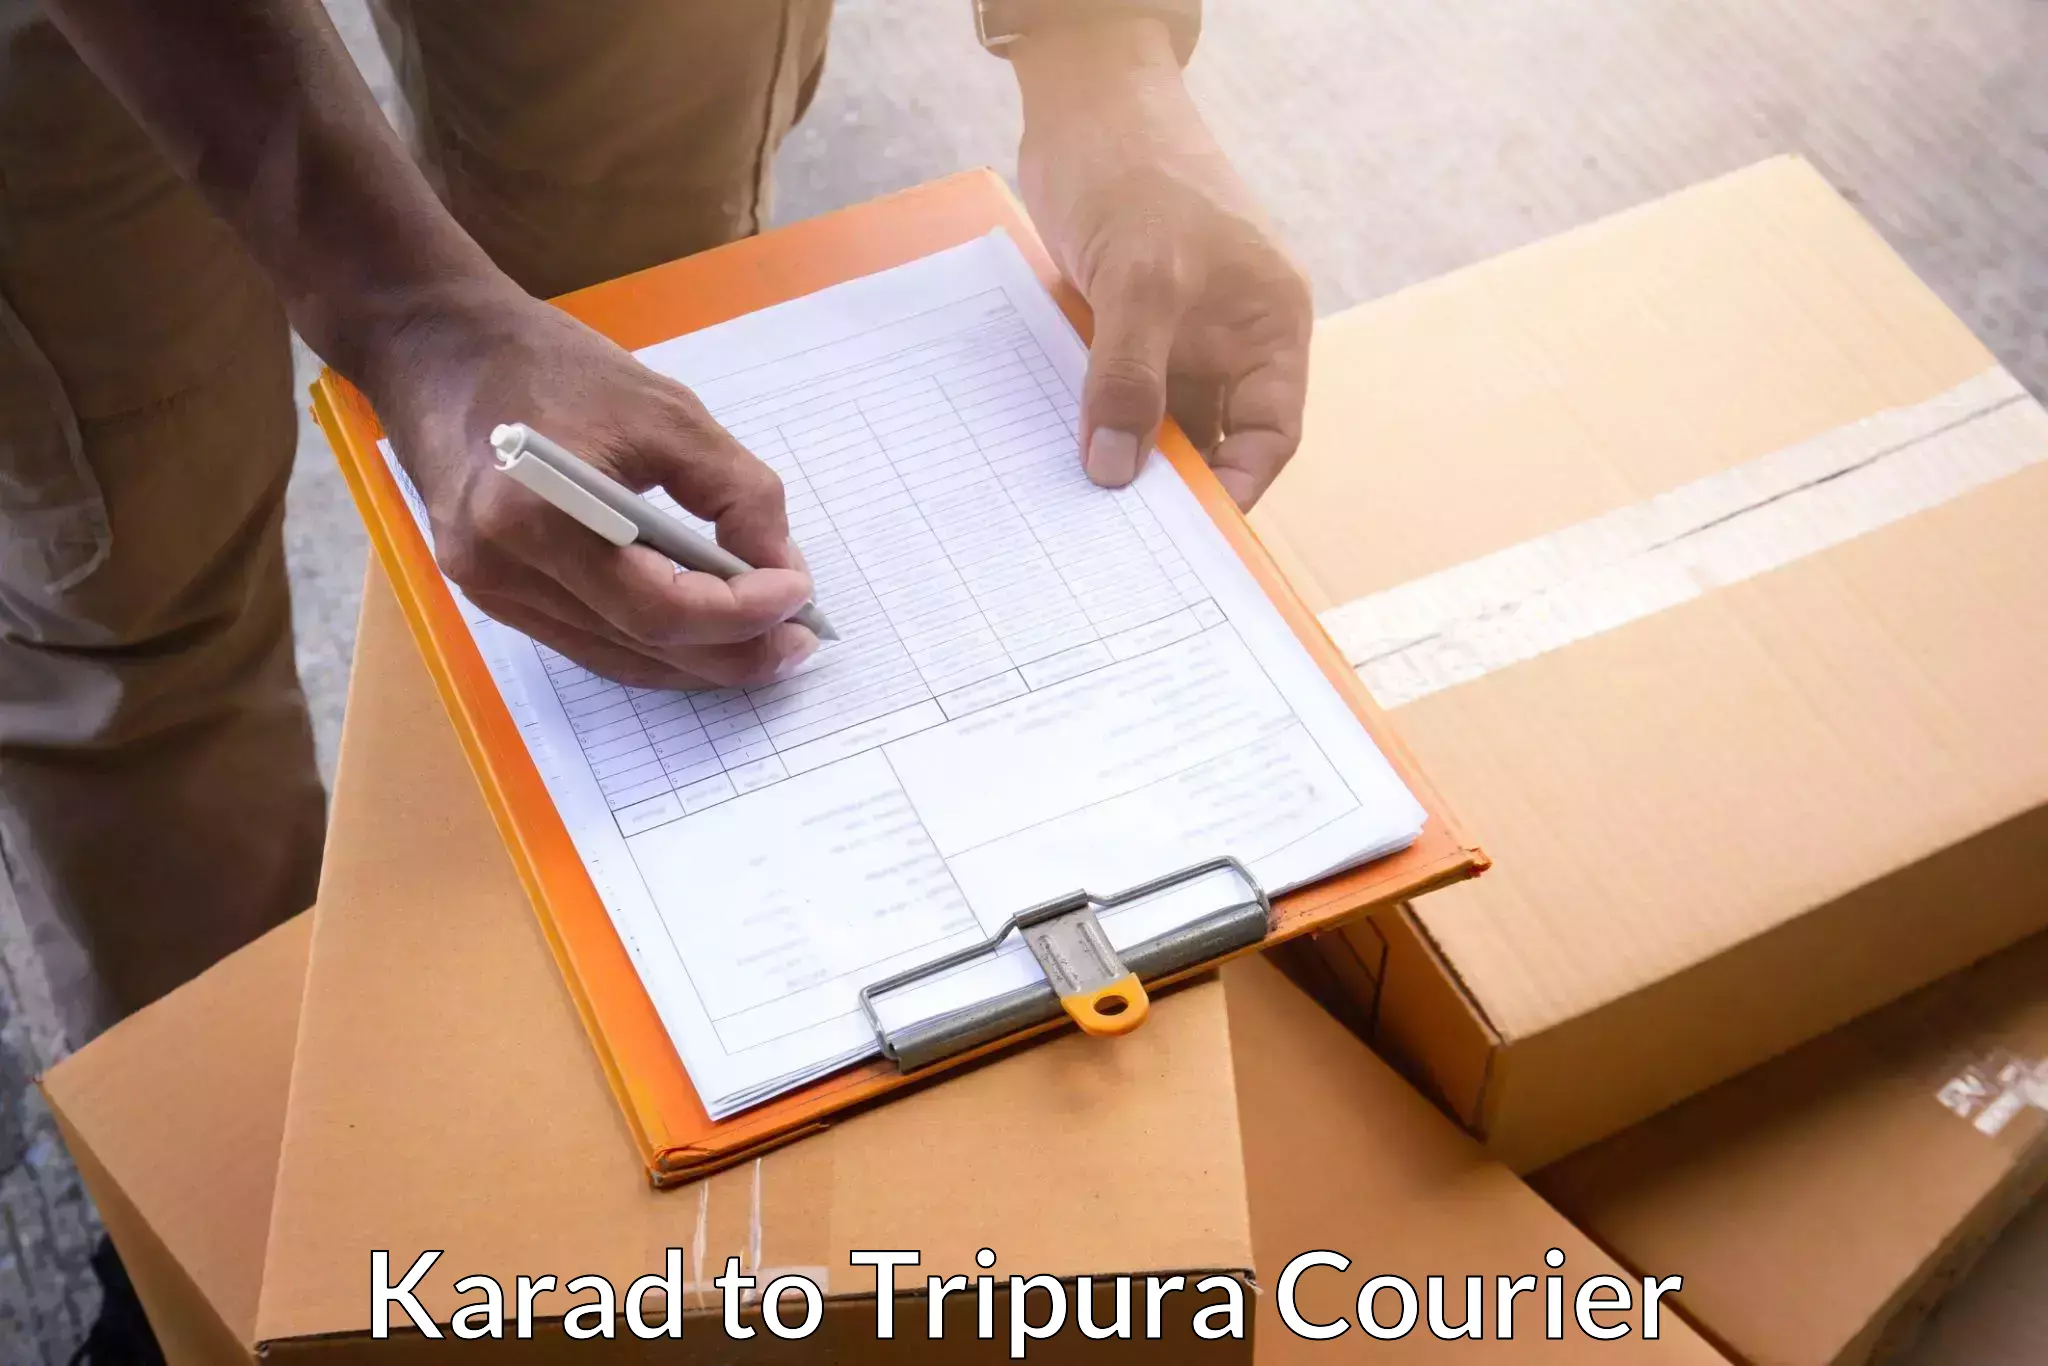 Bulk shipping discounts Karad to Tripura